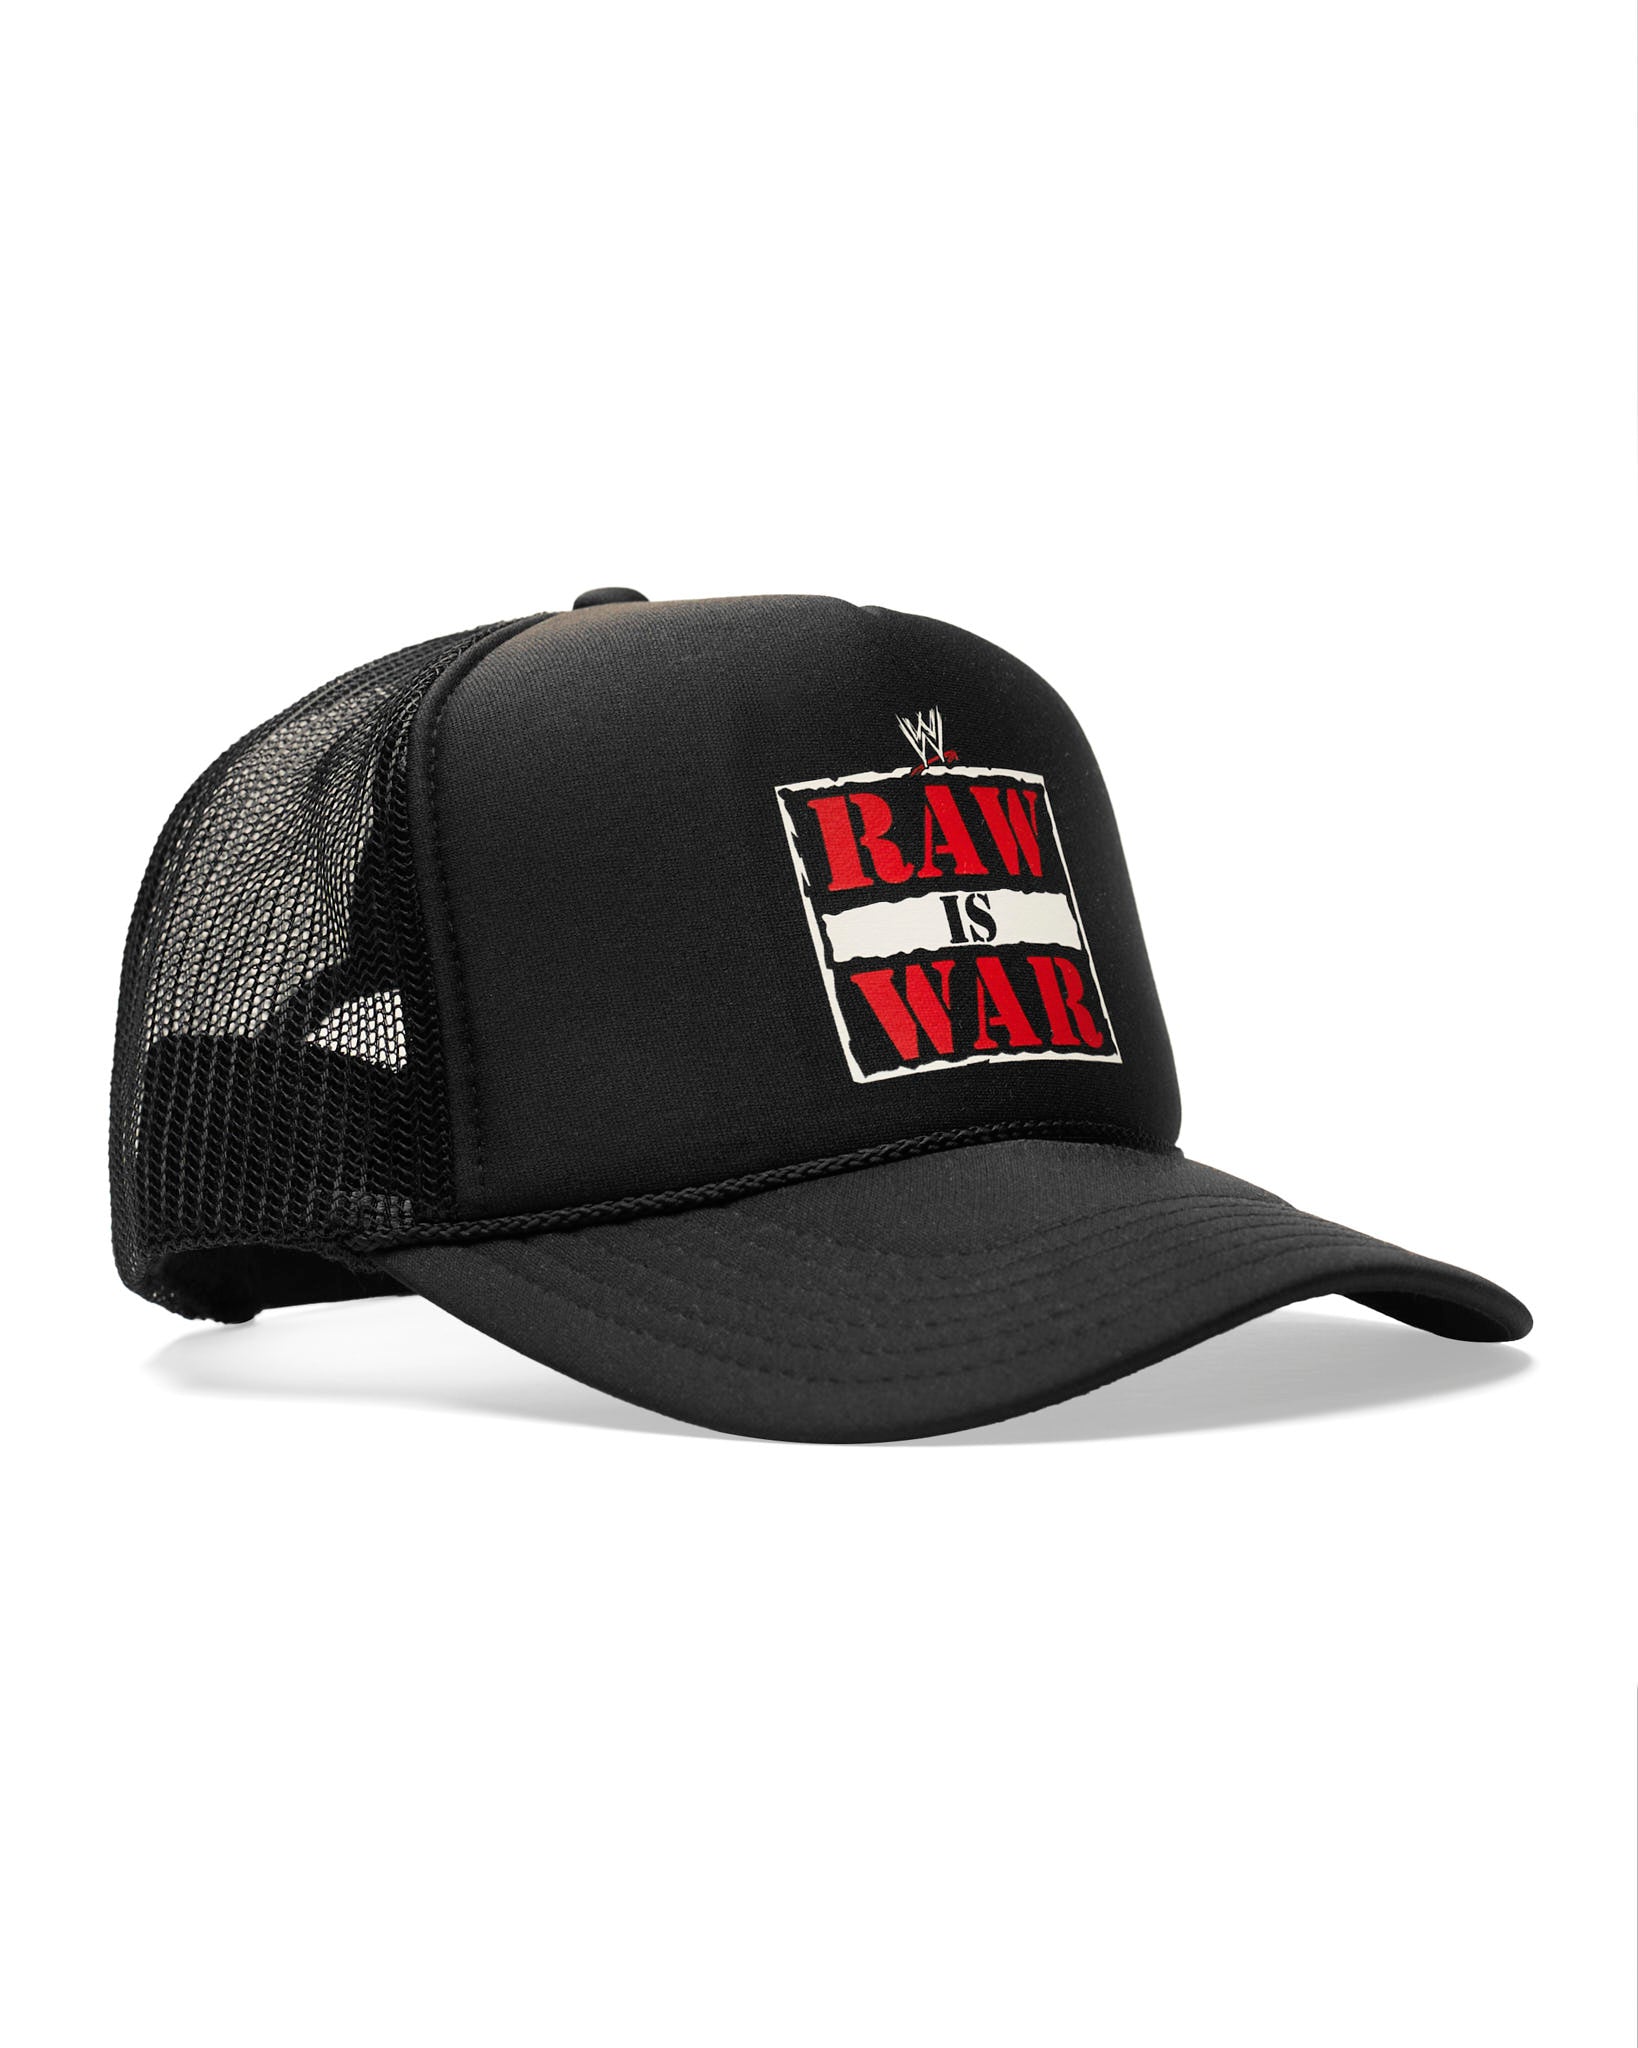 Raw is War Black Trucker Hat